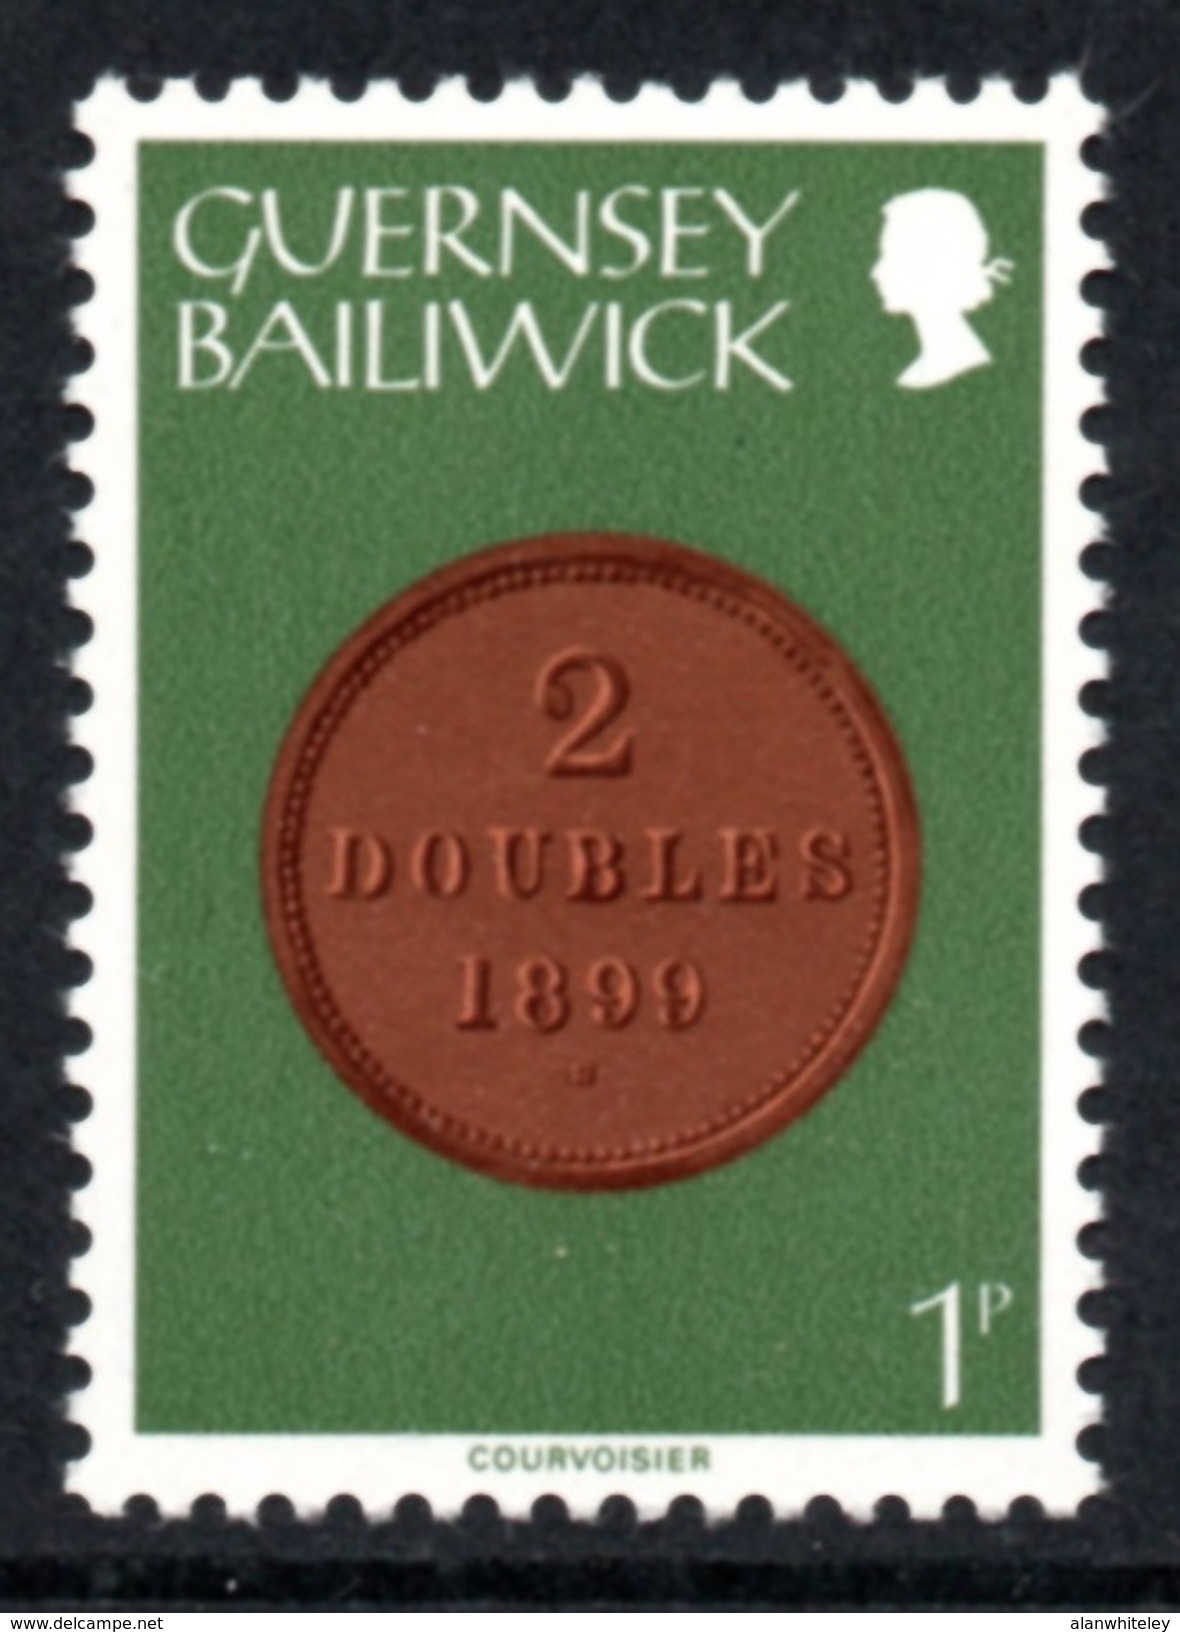 GUERNSEY 1979 Definitives / Coins 1p: Single Stamp UM/MNH - Guernsey